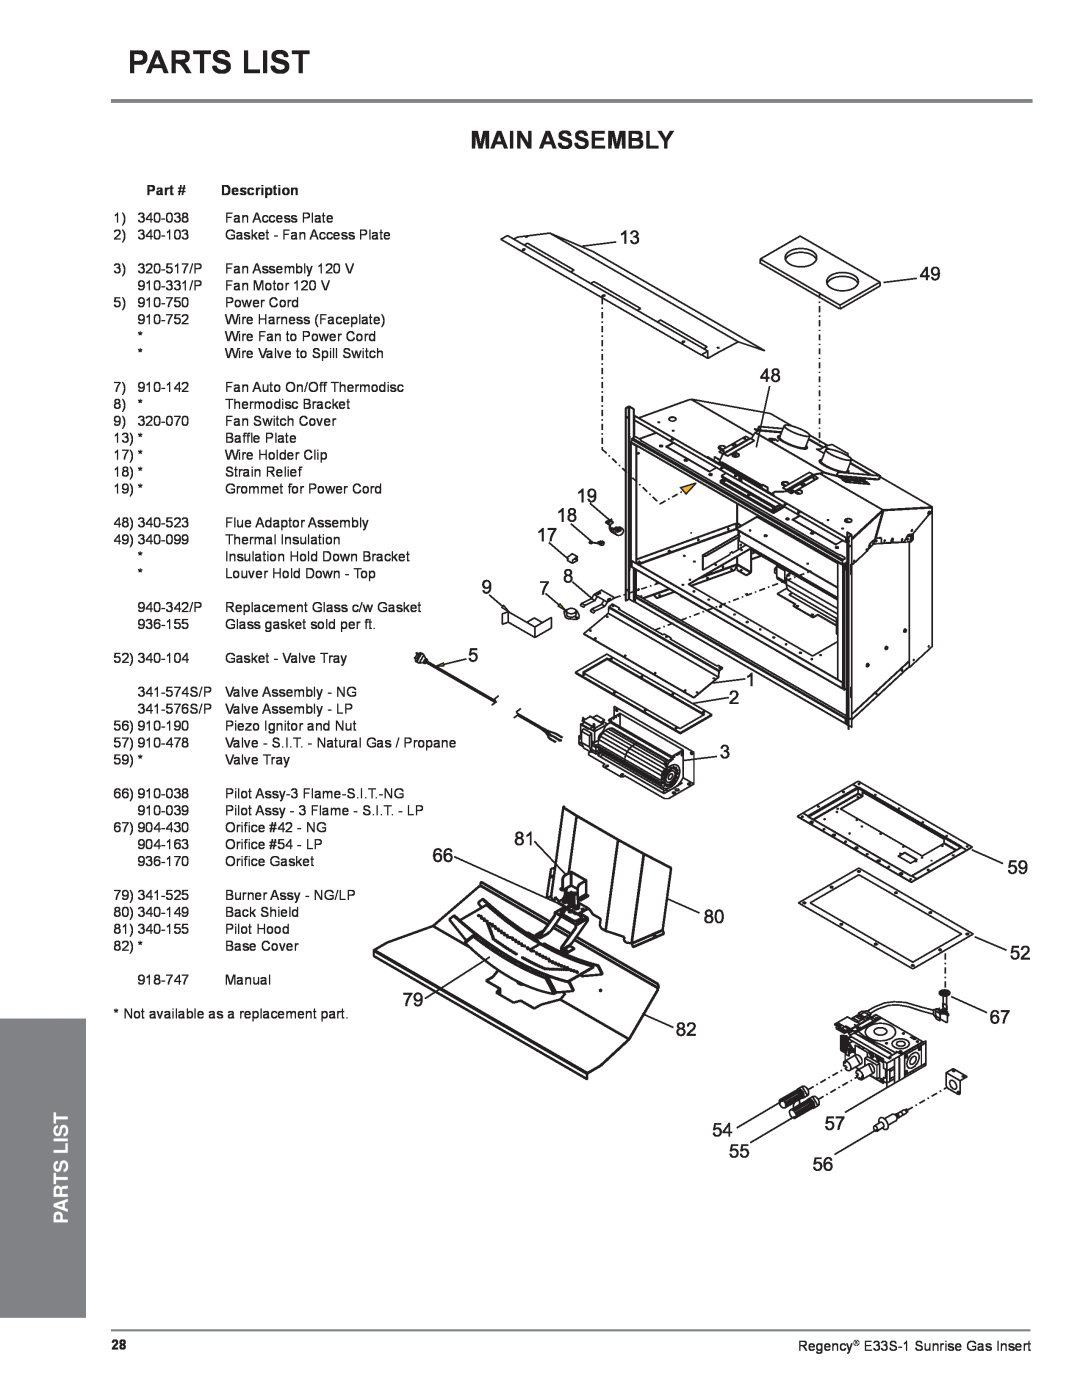 Regency E33S installation manual Parts List, Main Assembly, Description 